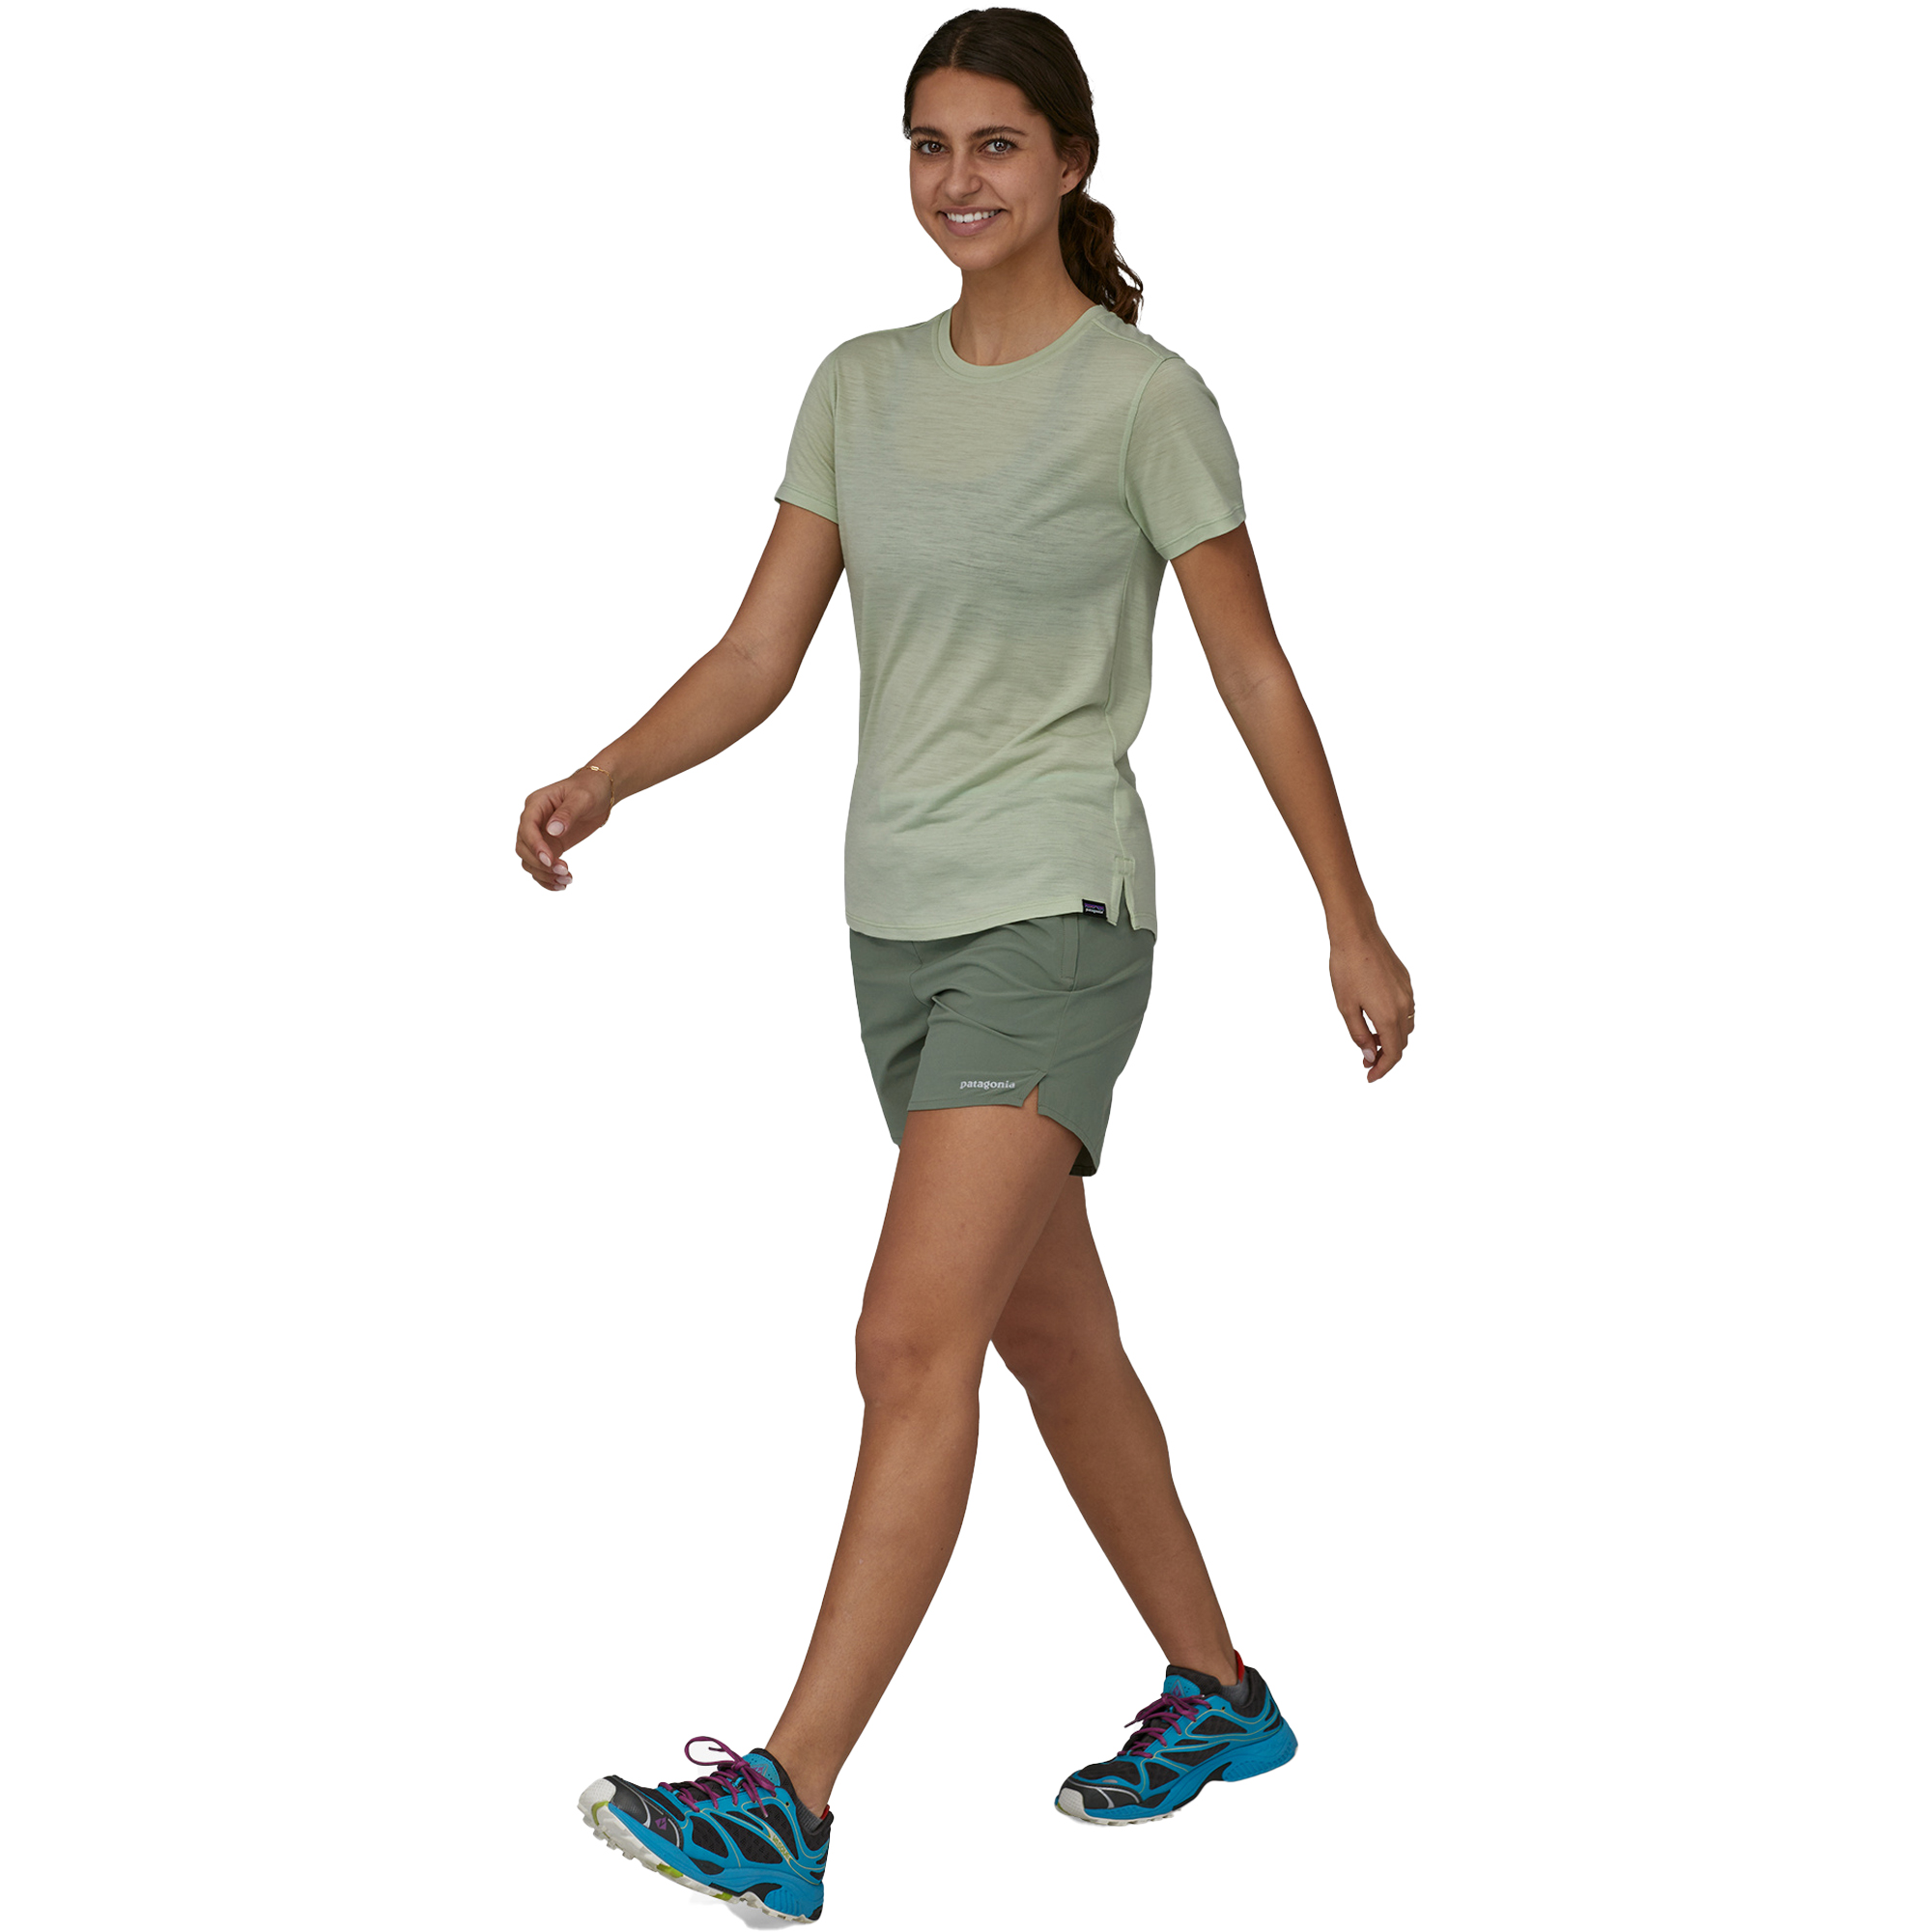 Patagonia Multi Trails Women's 5.5" Shorts